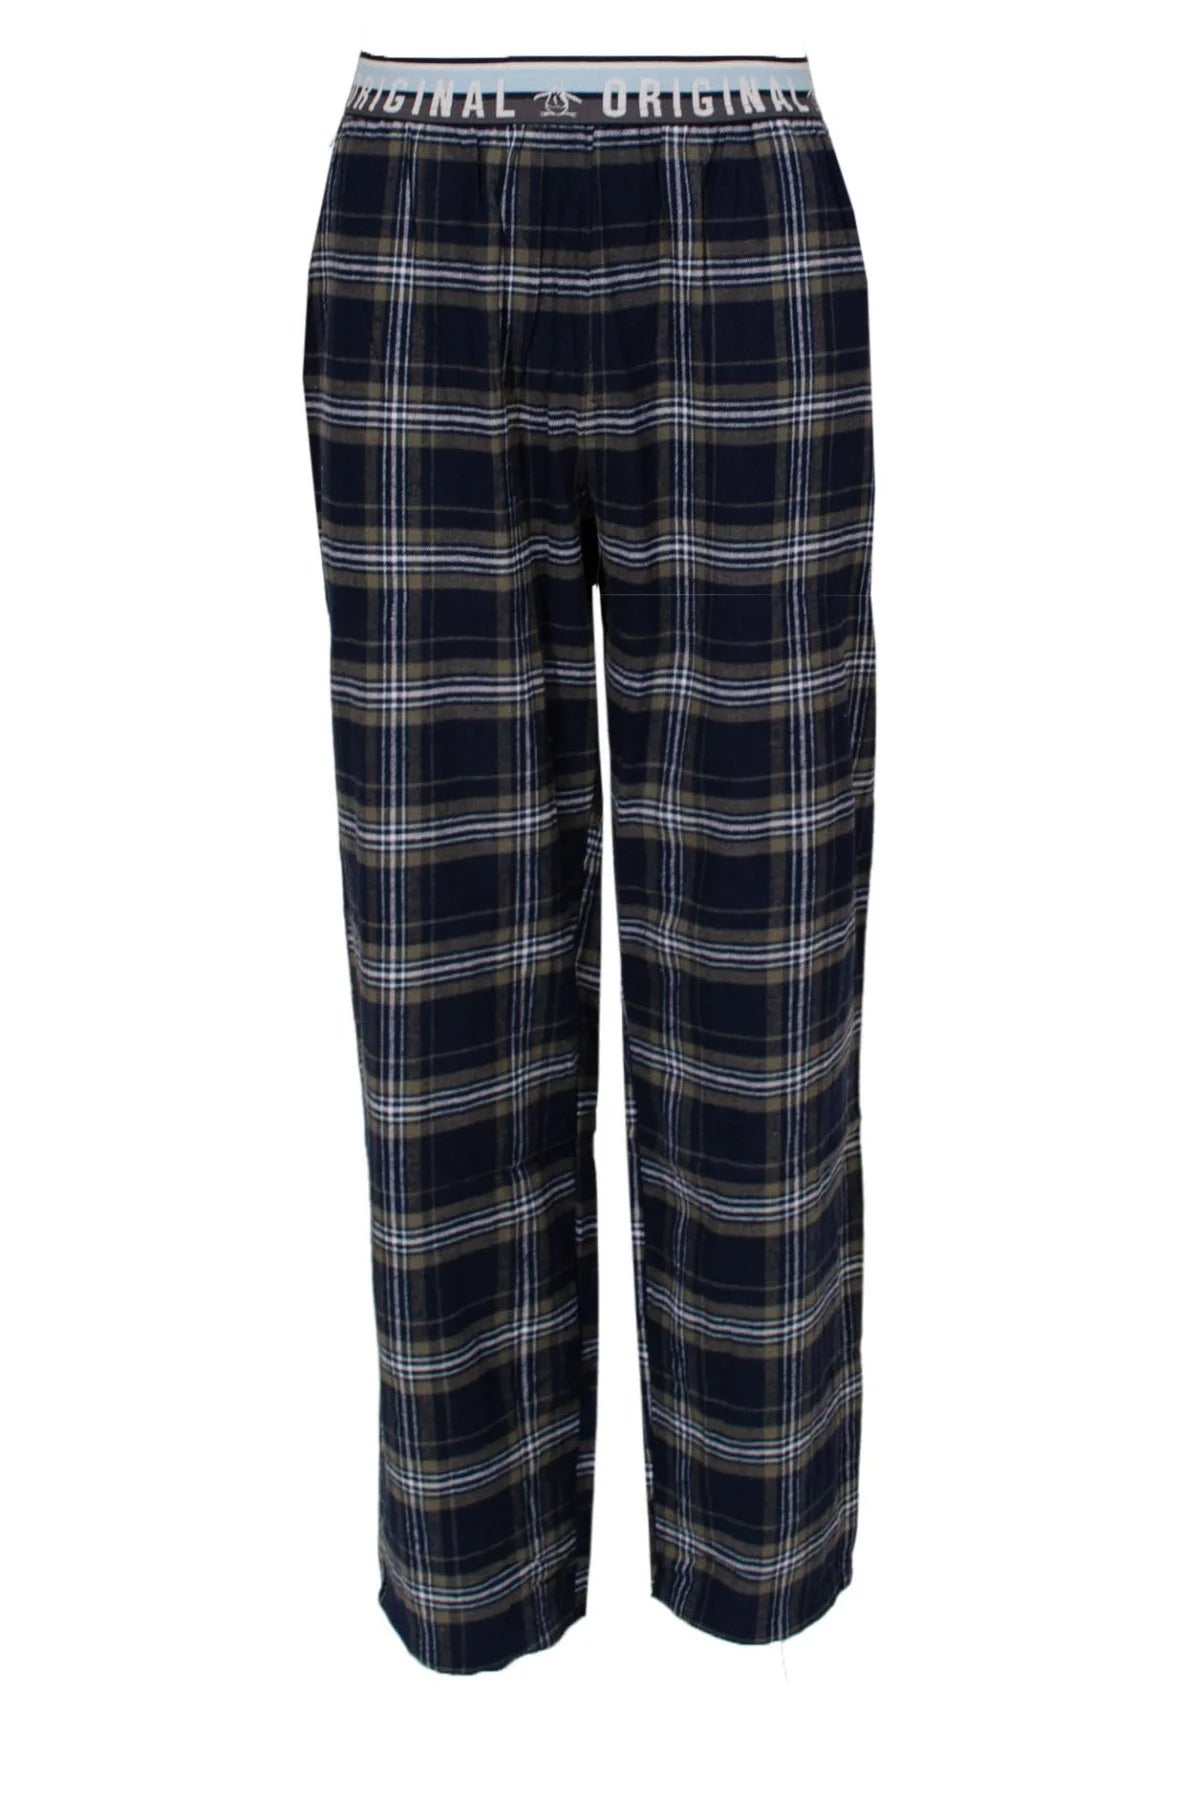 Penguin Cotton Check Pyjama Lounge Pants Navy/Green / 3XL